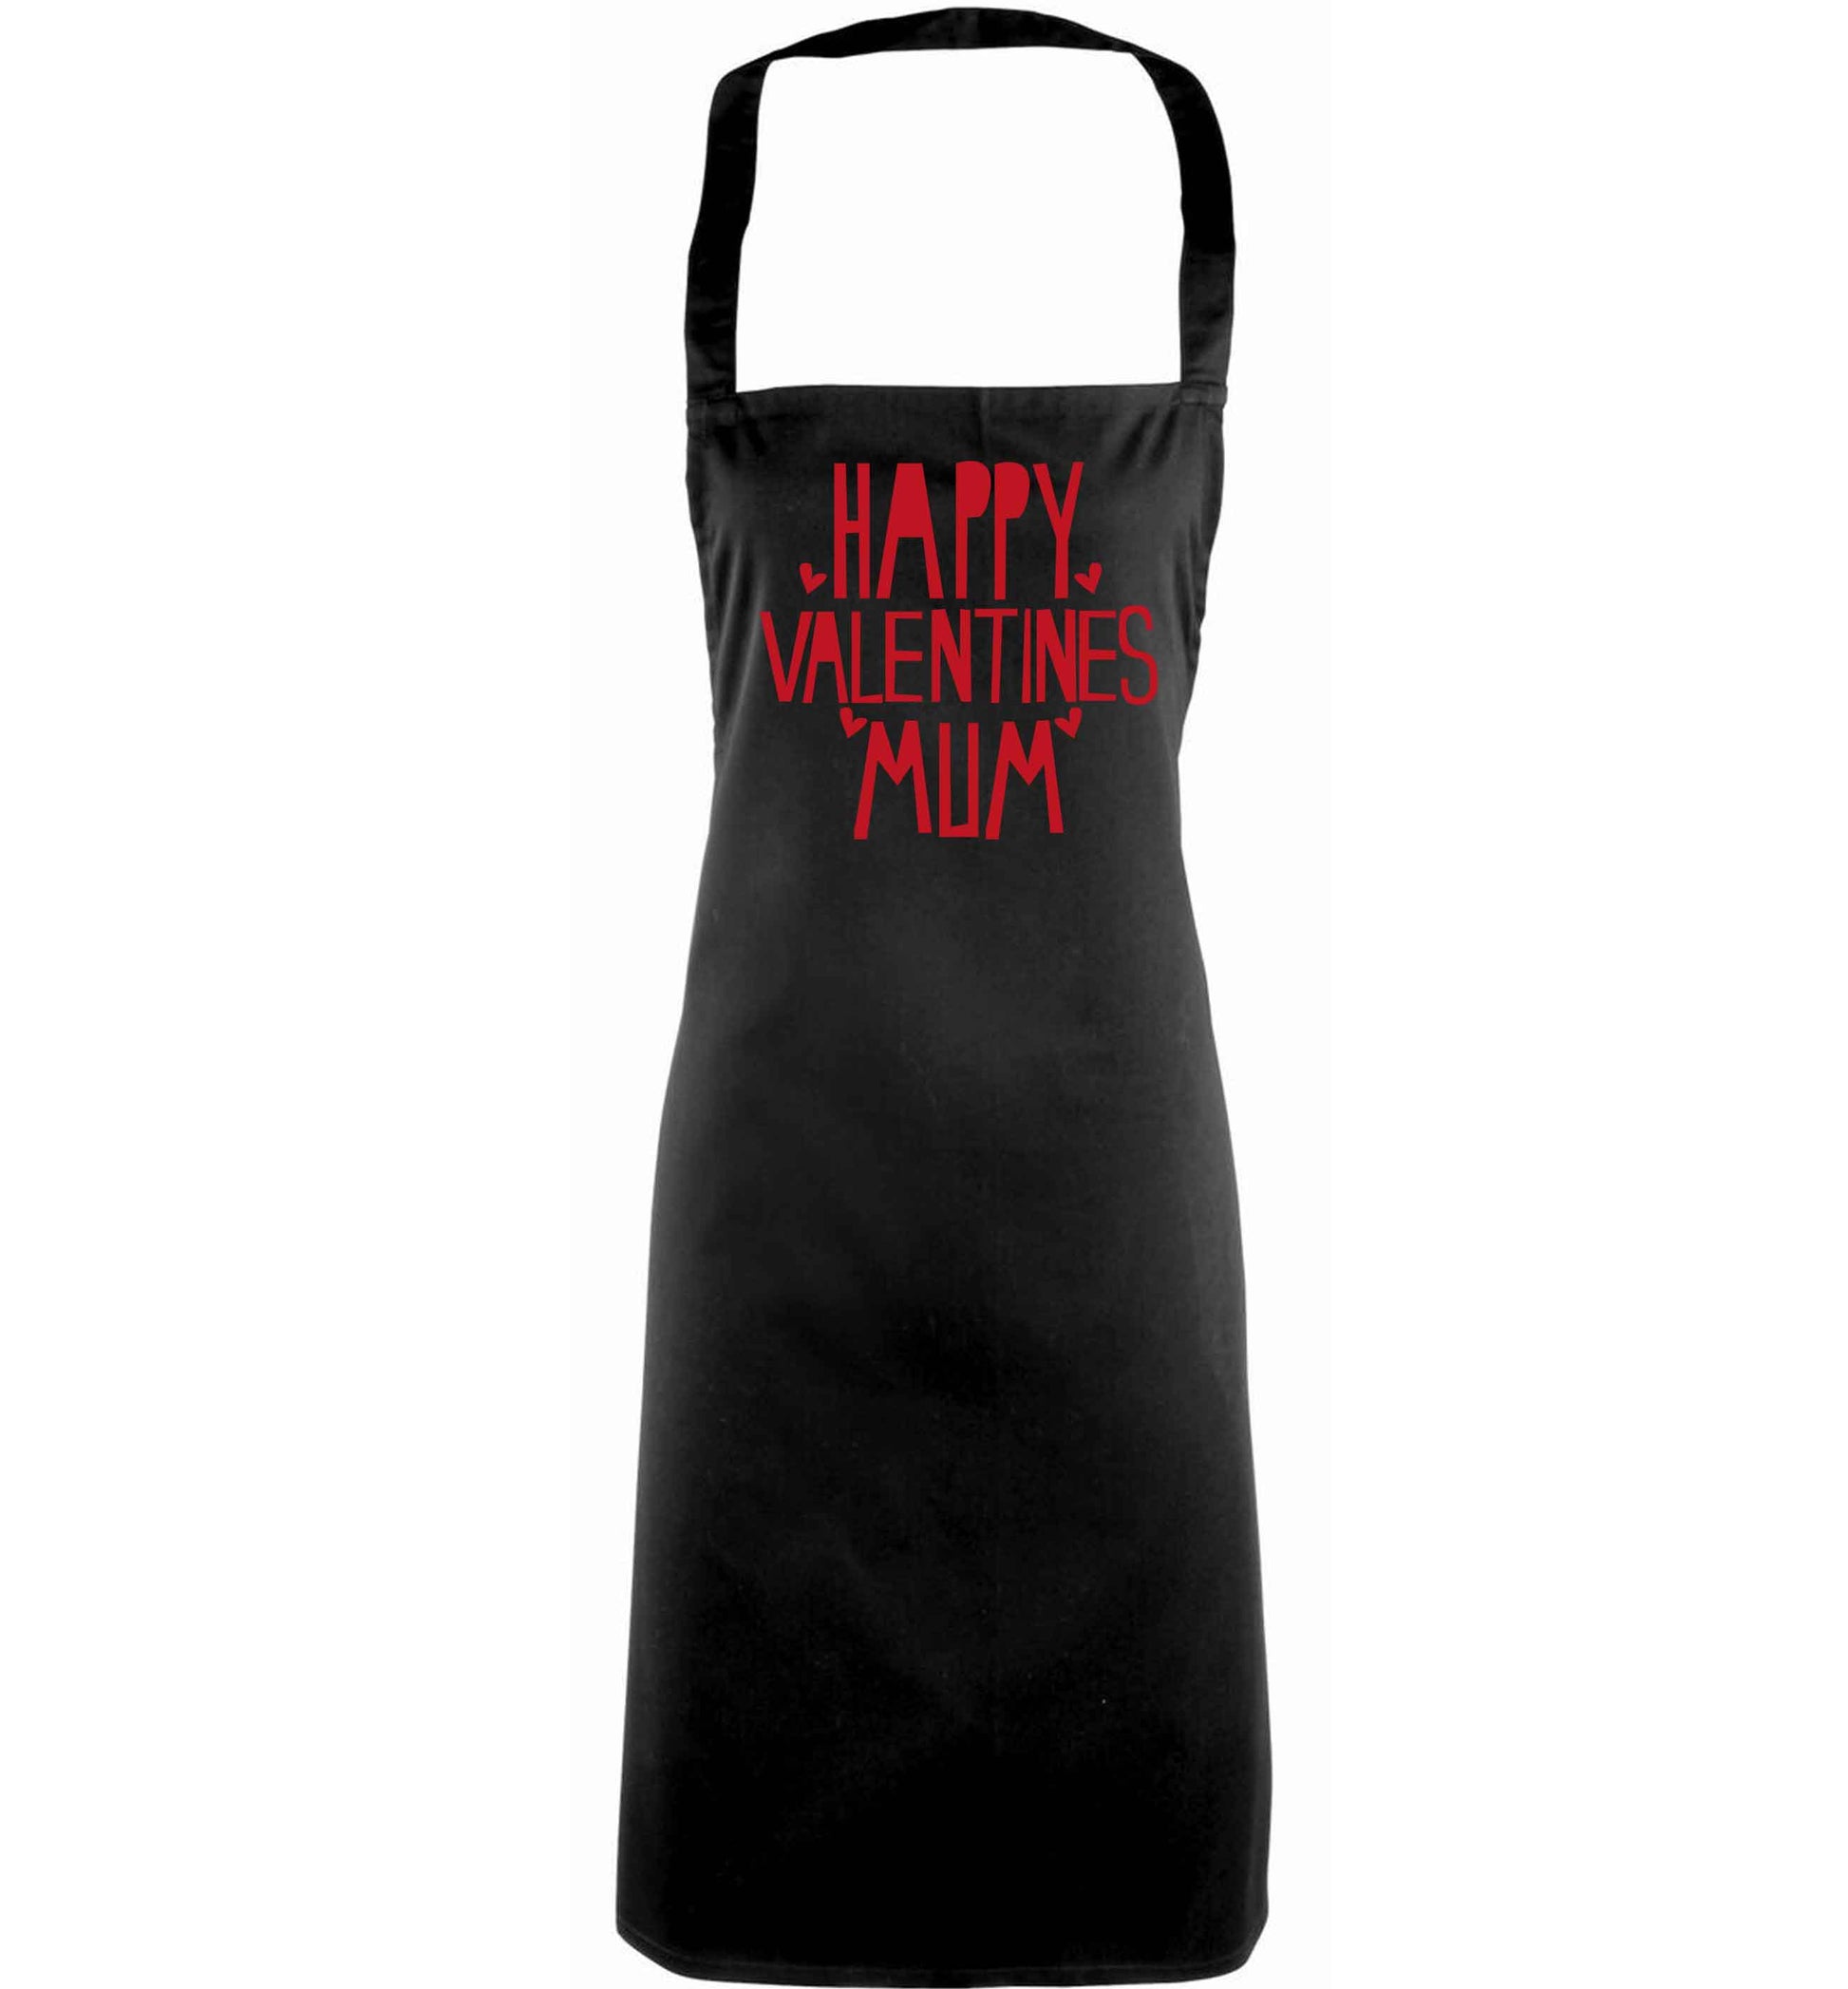 Happy valentines mum adults black apron